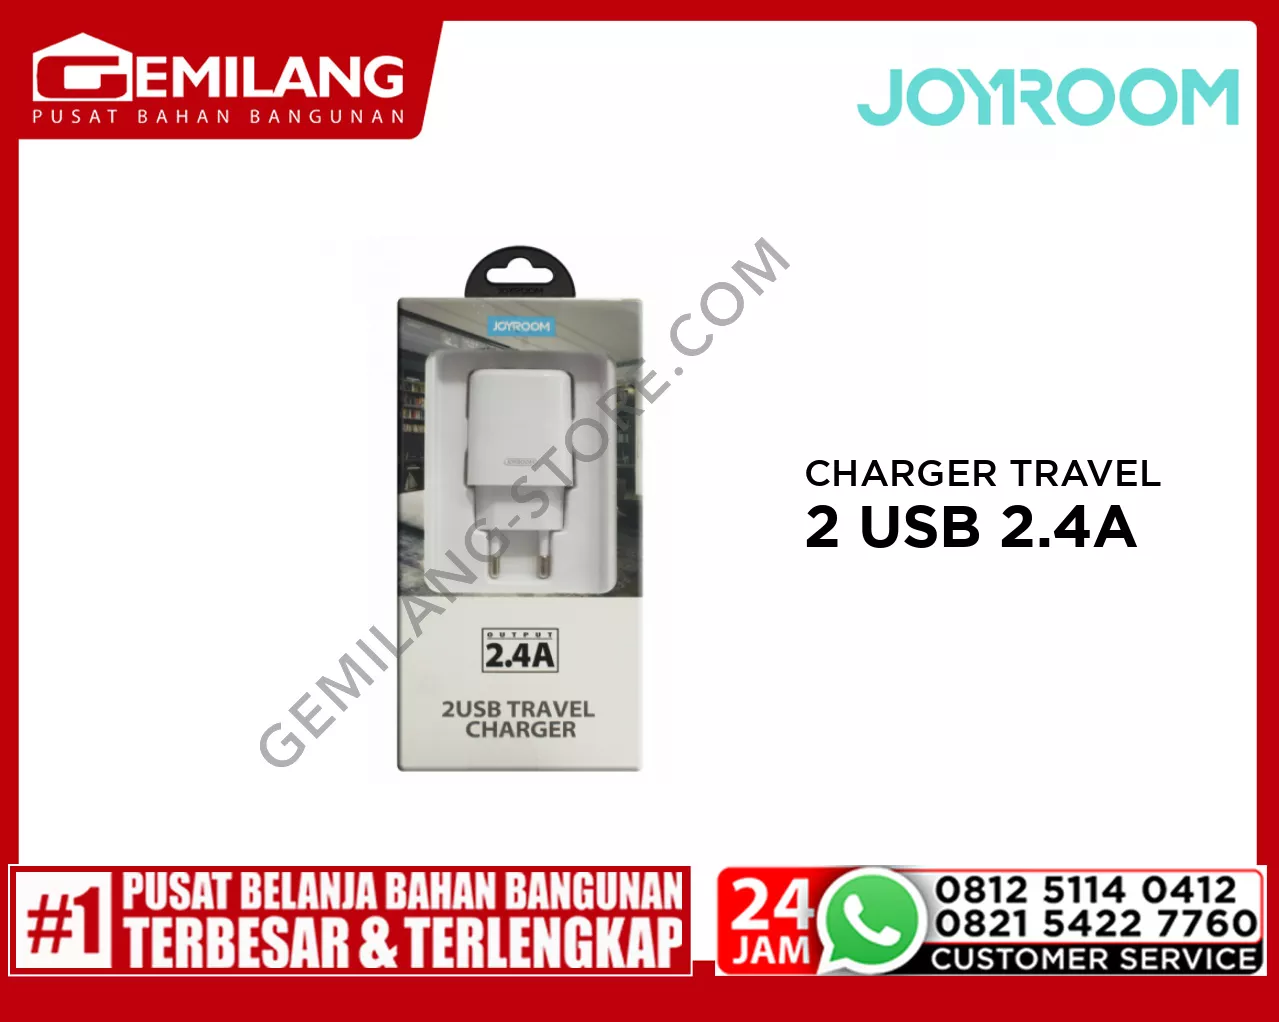 JOYROOM CHARGER TRAVEL 2 USB 2.4A L-M226